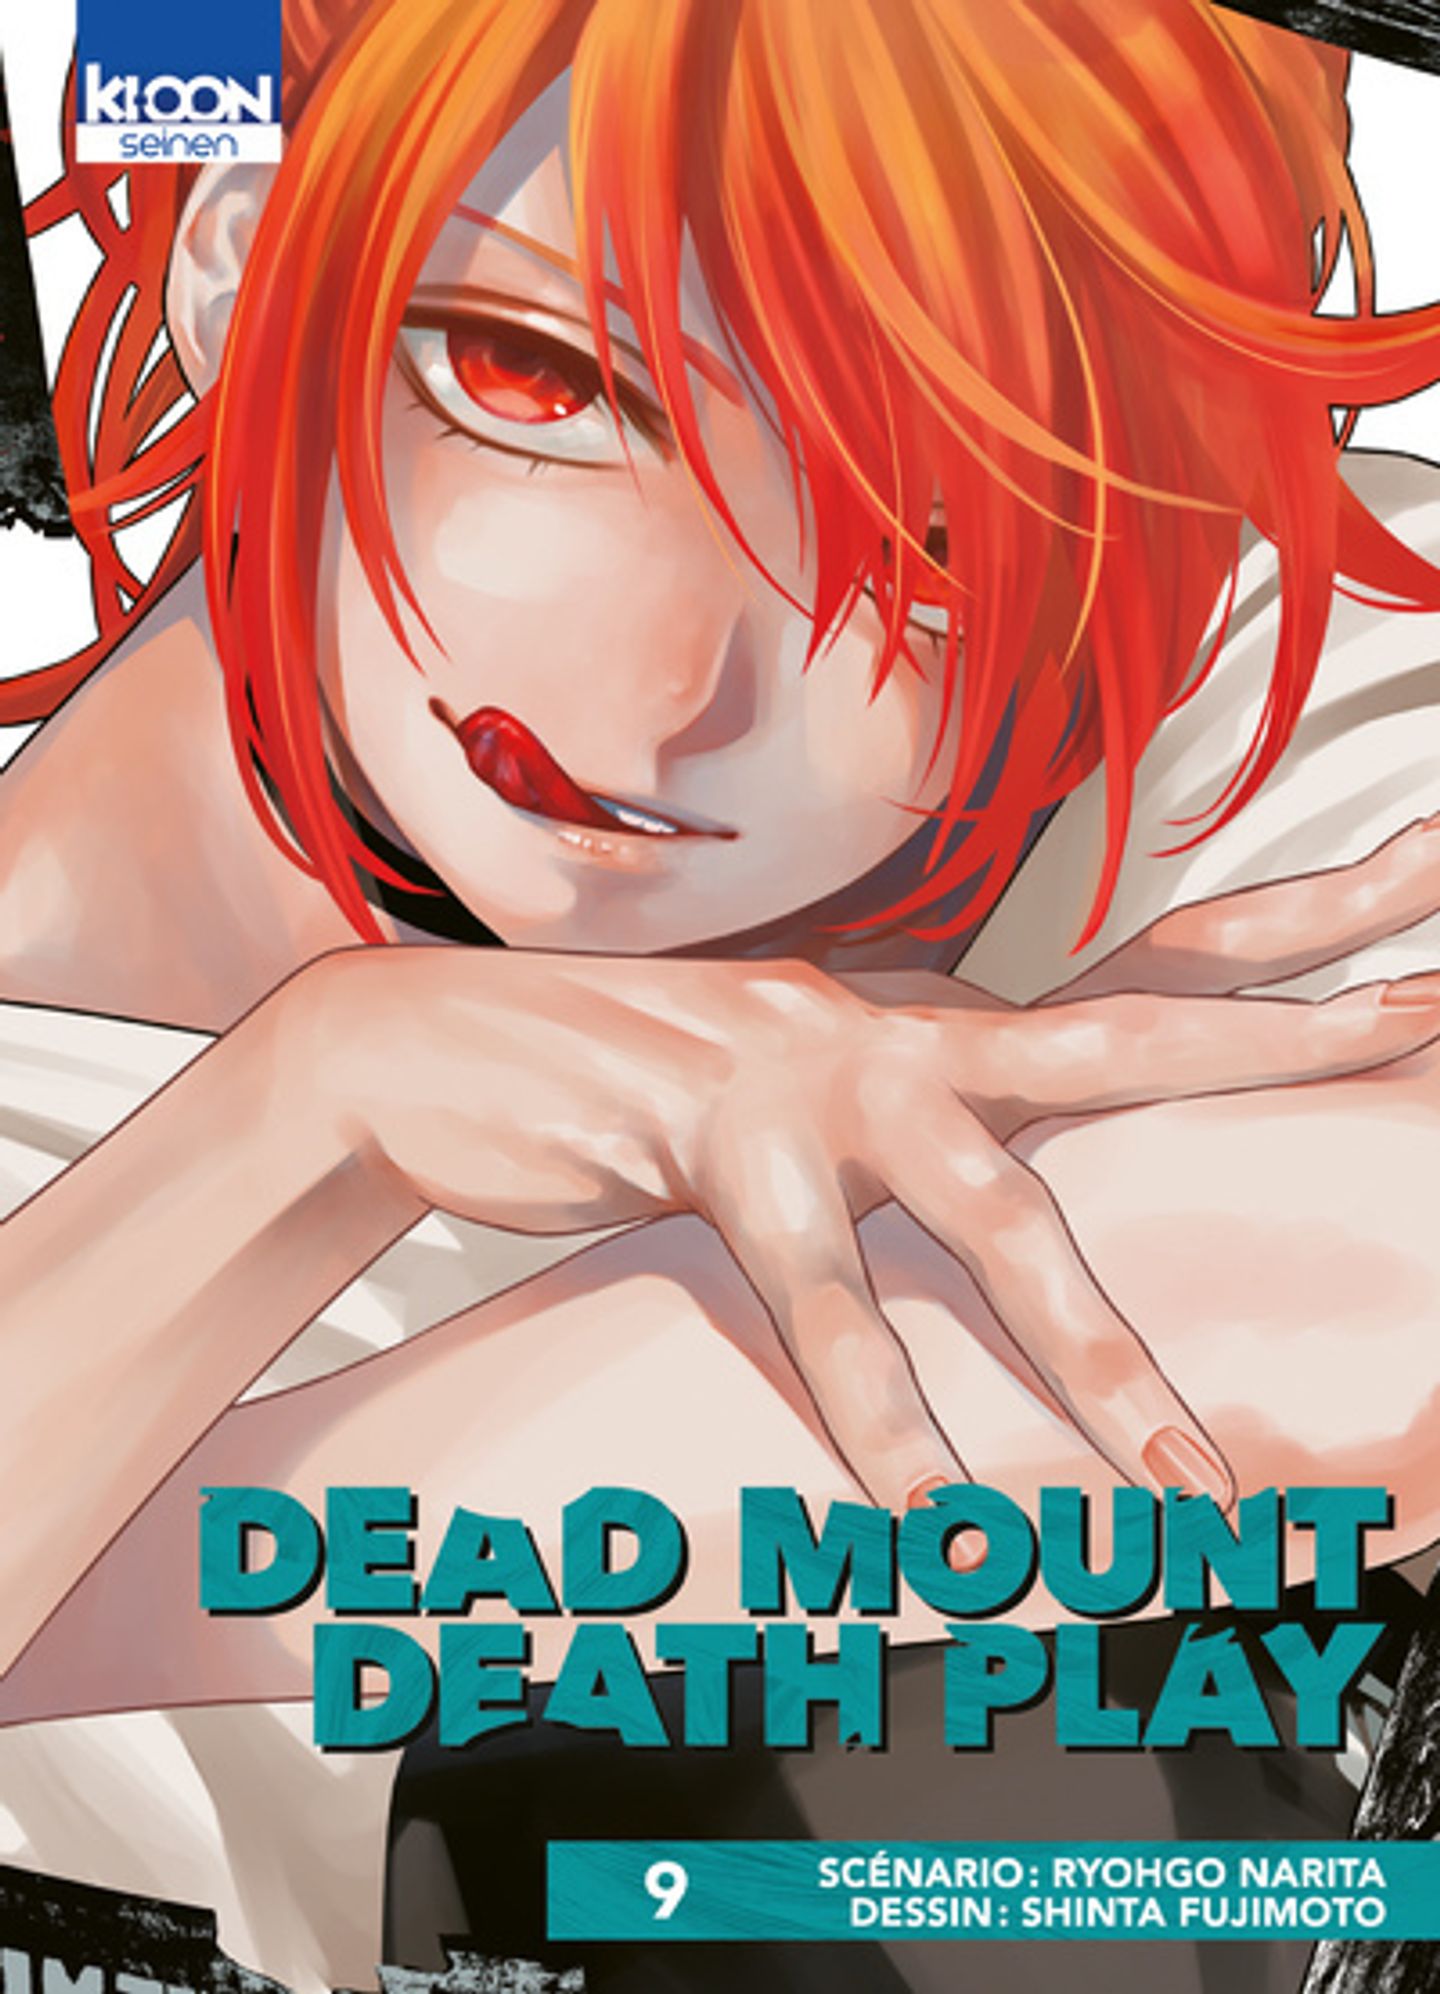 Dead Mount Death Play Episode 2 Recap: The New World